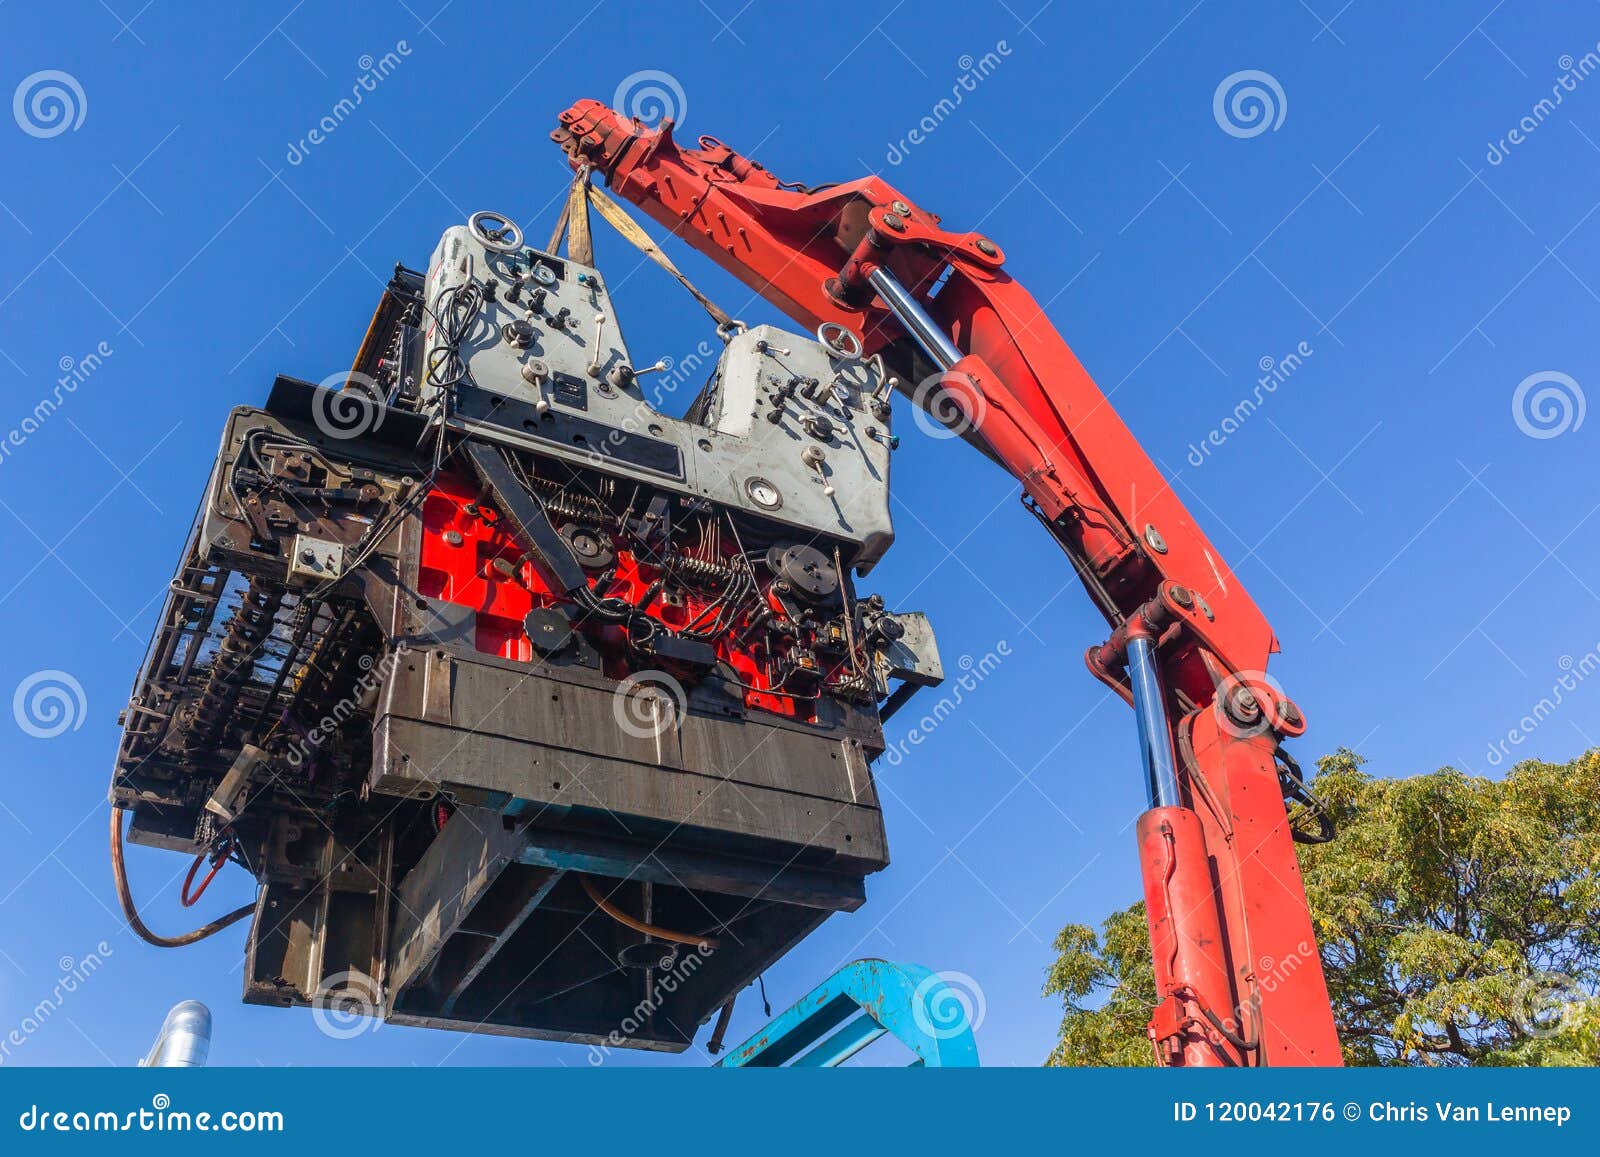 rigging hydraulic crane machine